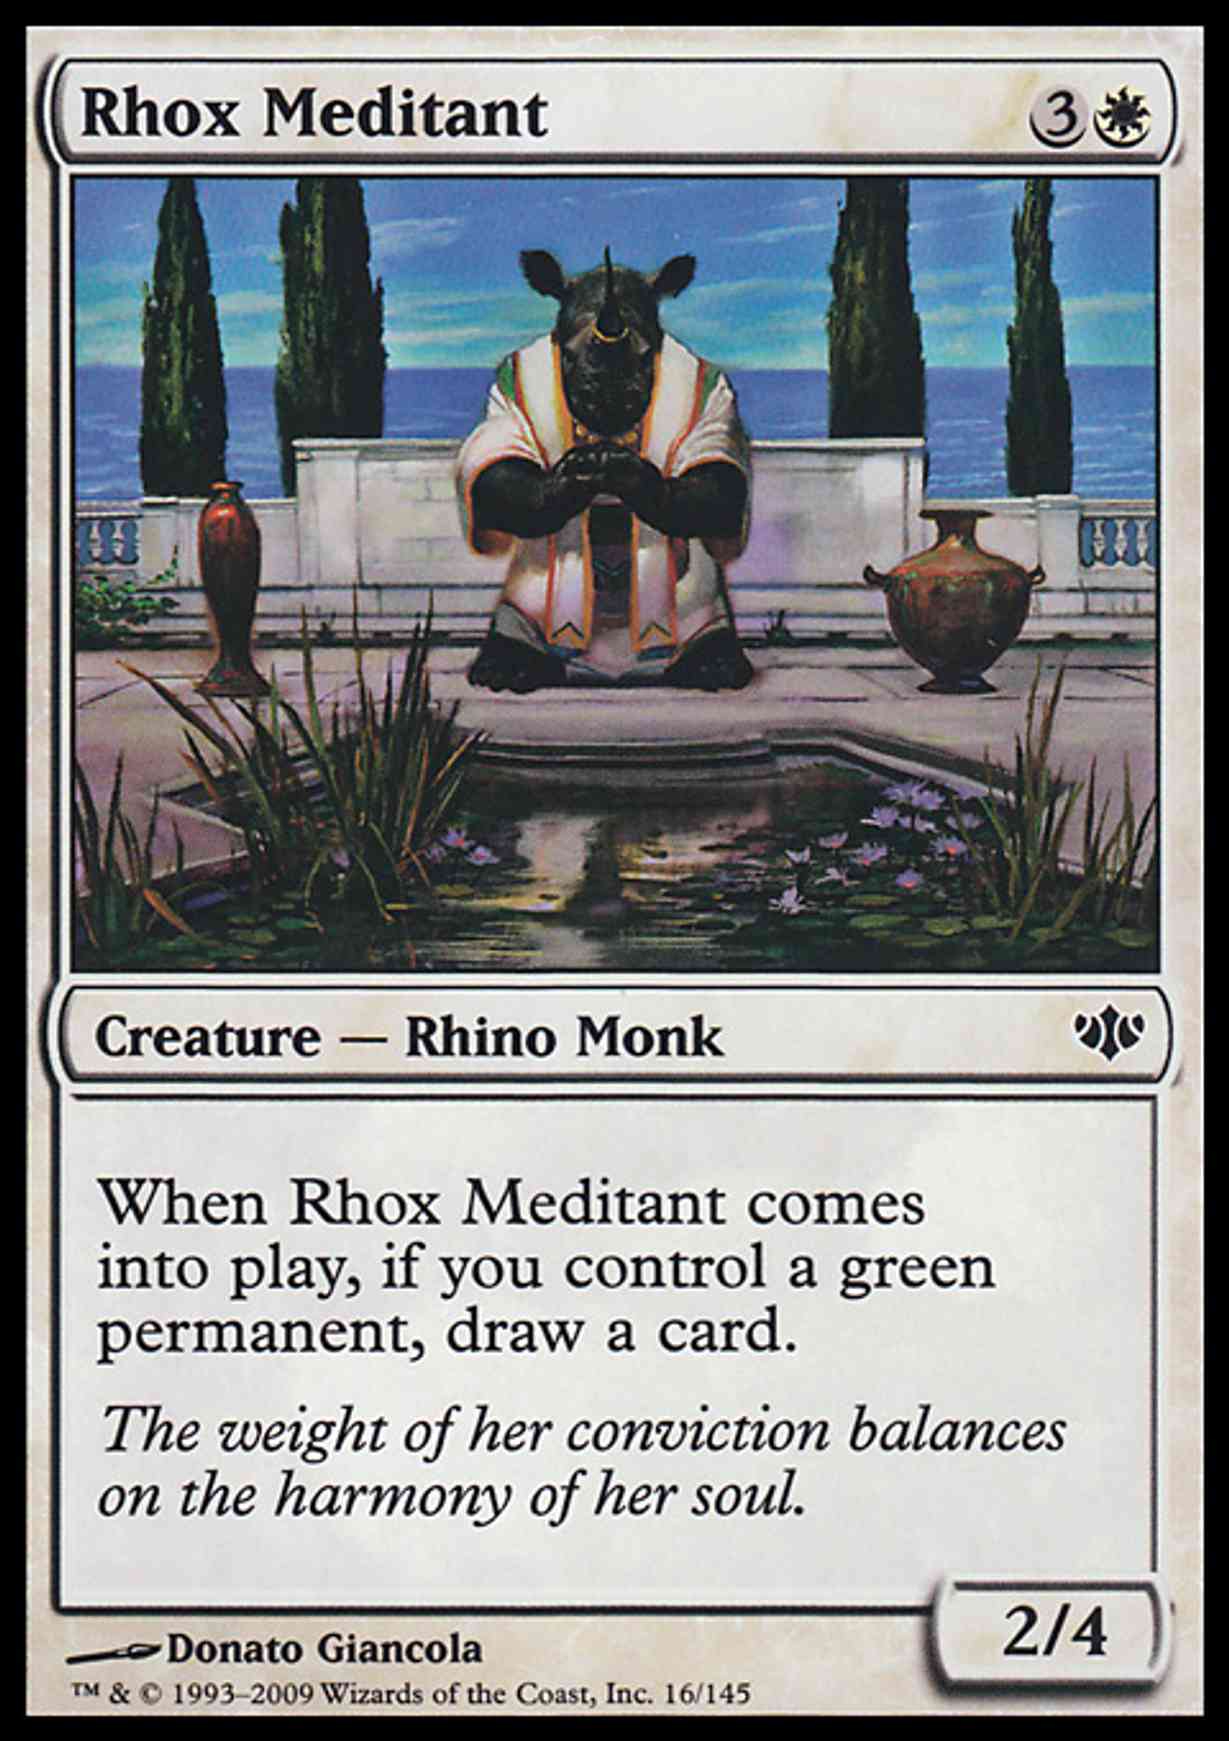 Rhox Meditant magic card front